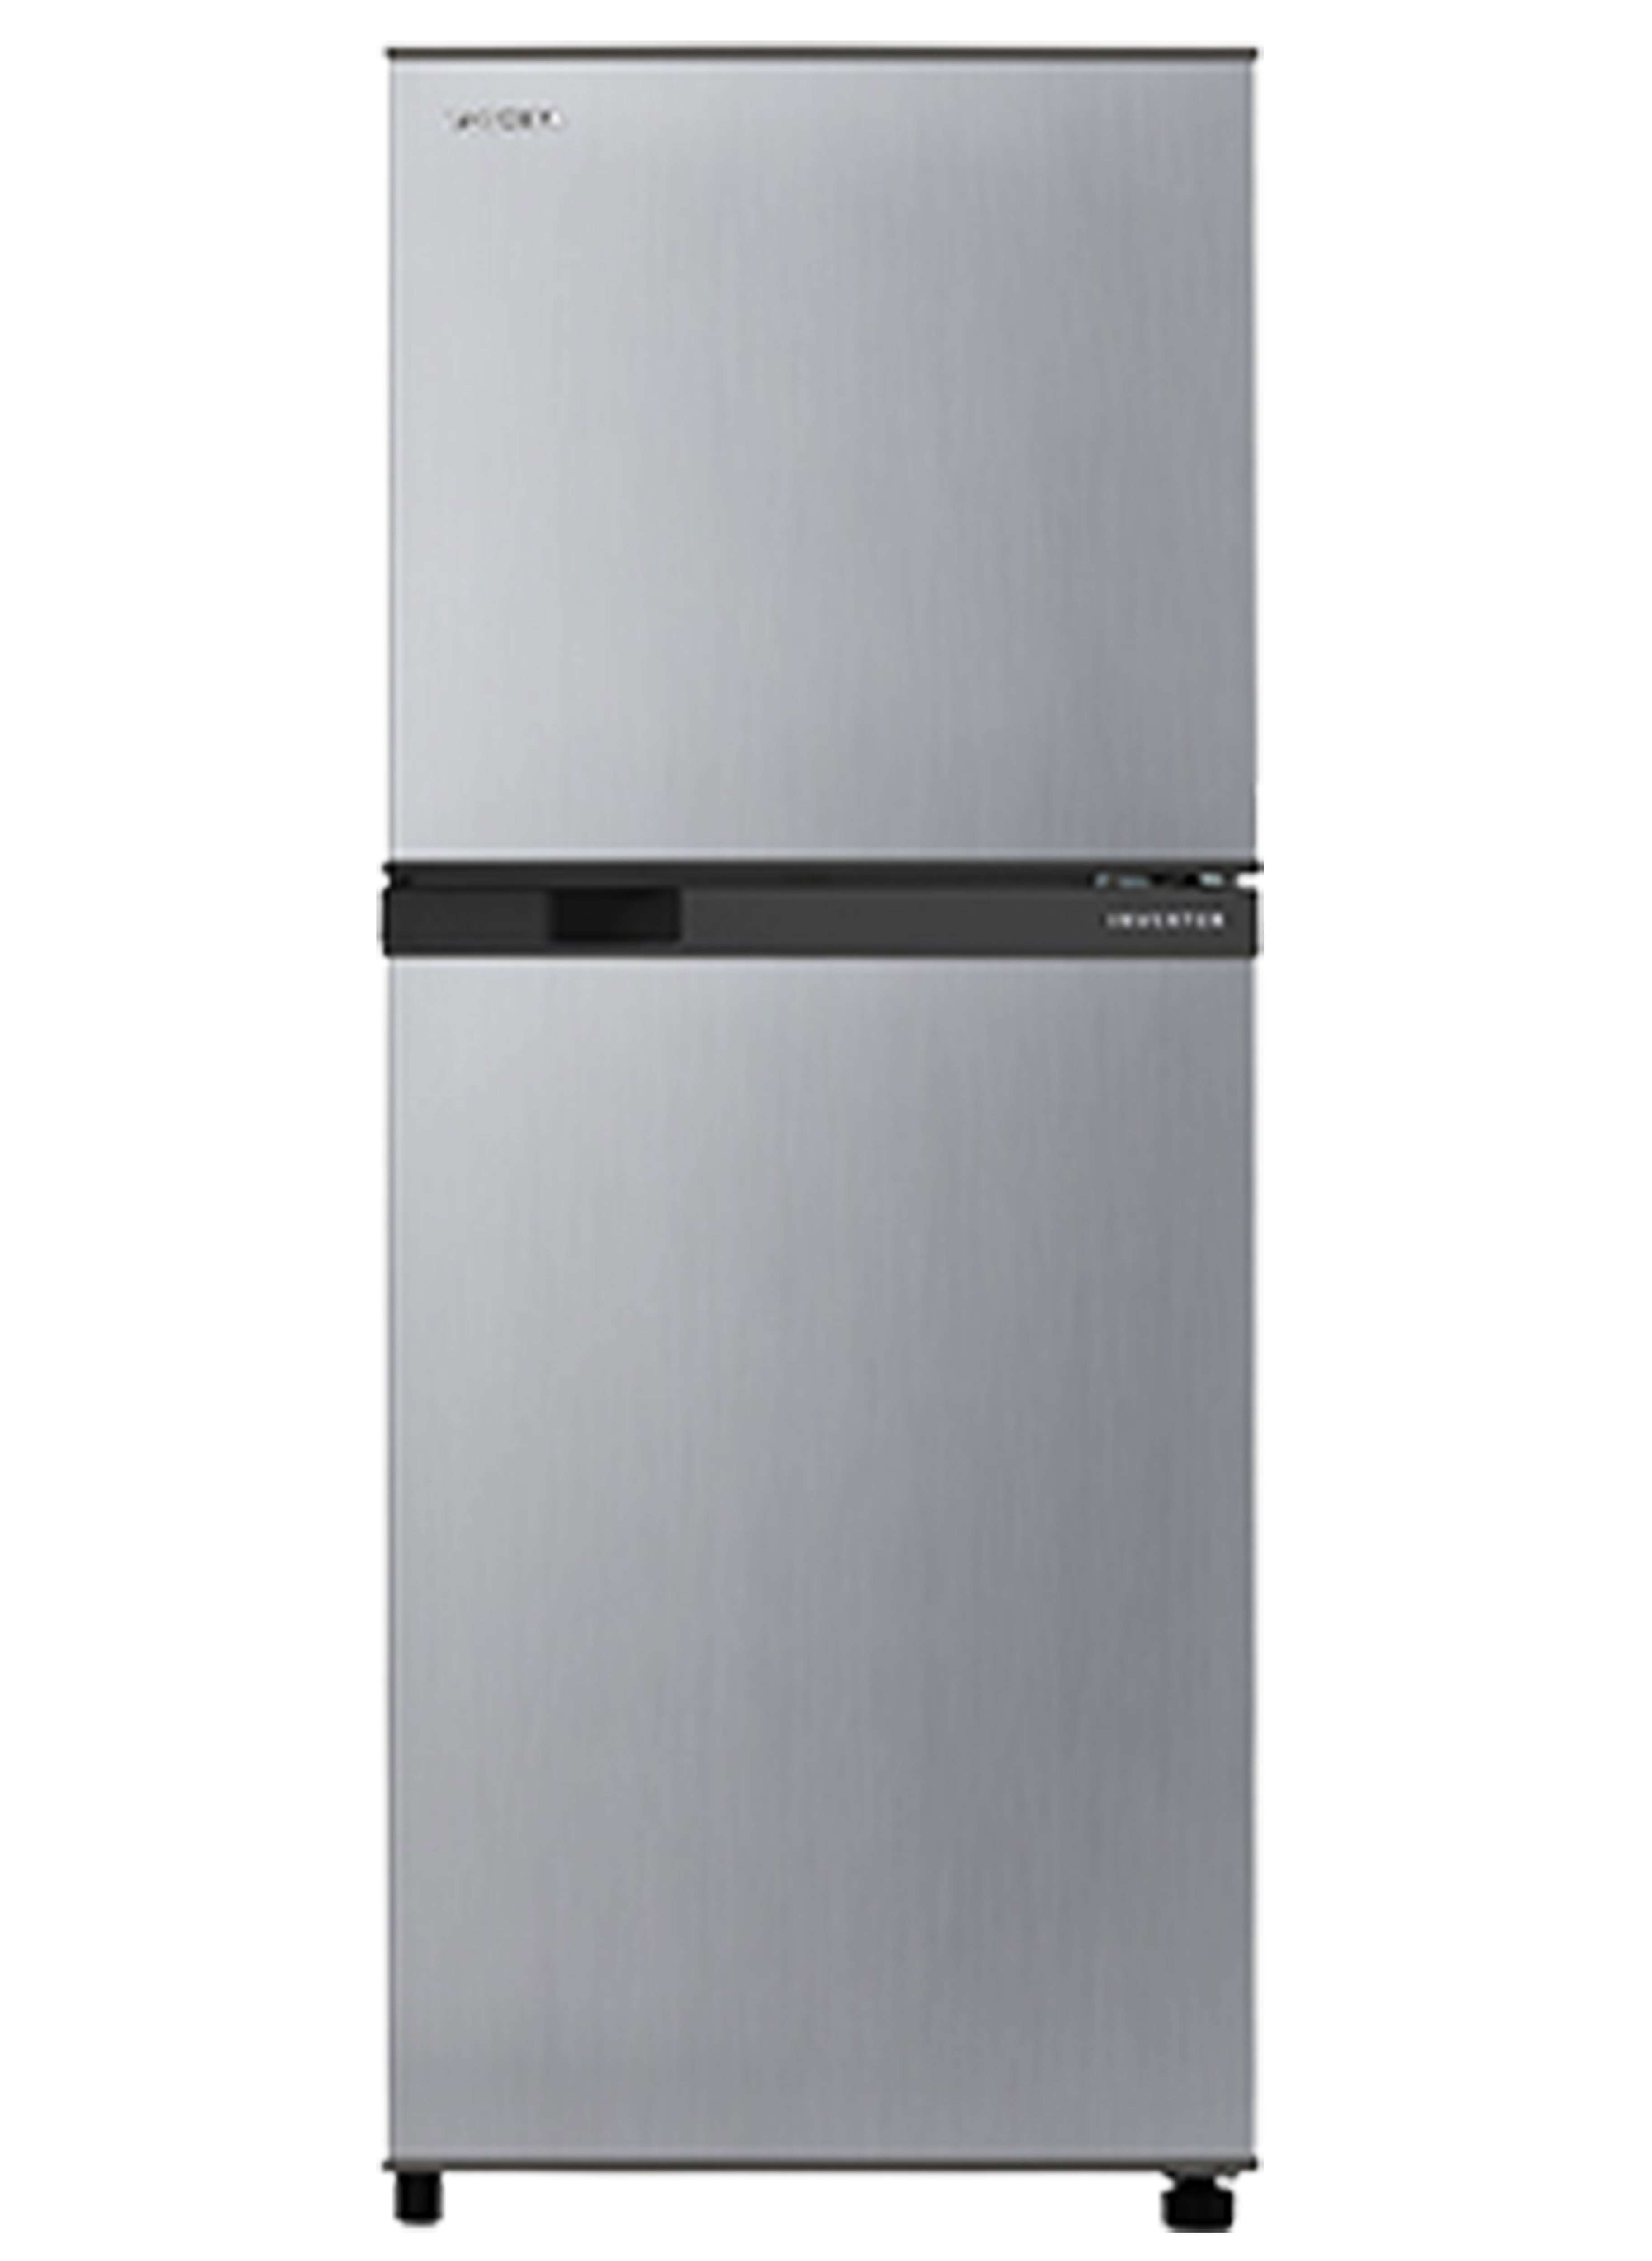 6.5 Cu Ft Refrigerator - Top Mount Freezer | Toshiba Middle East